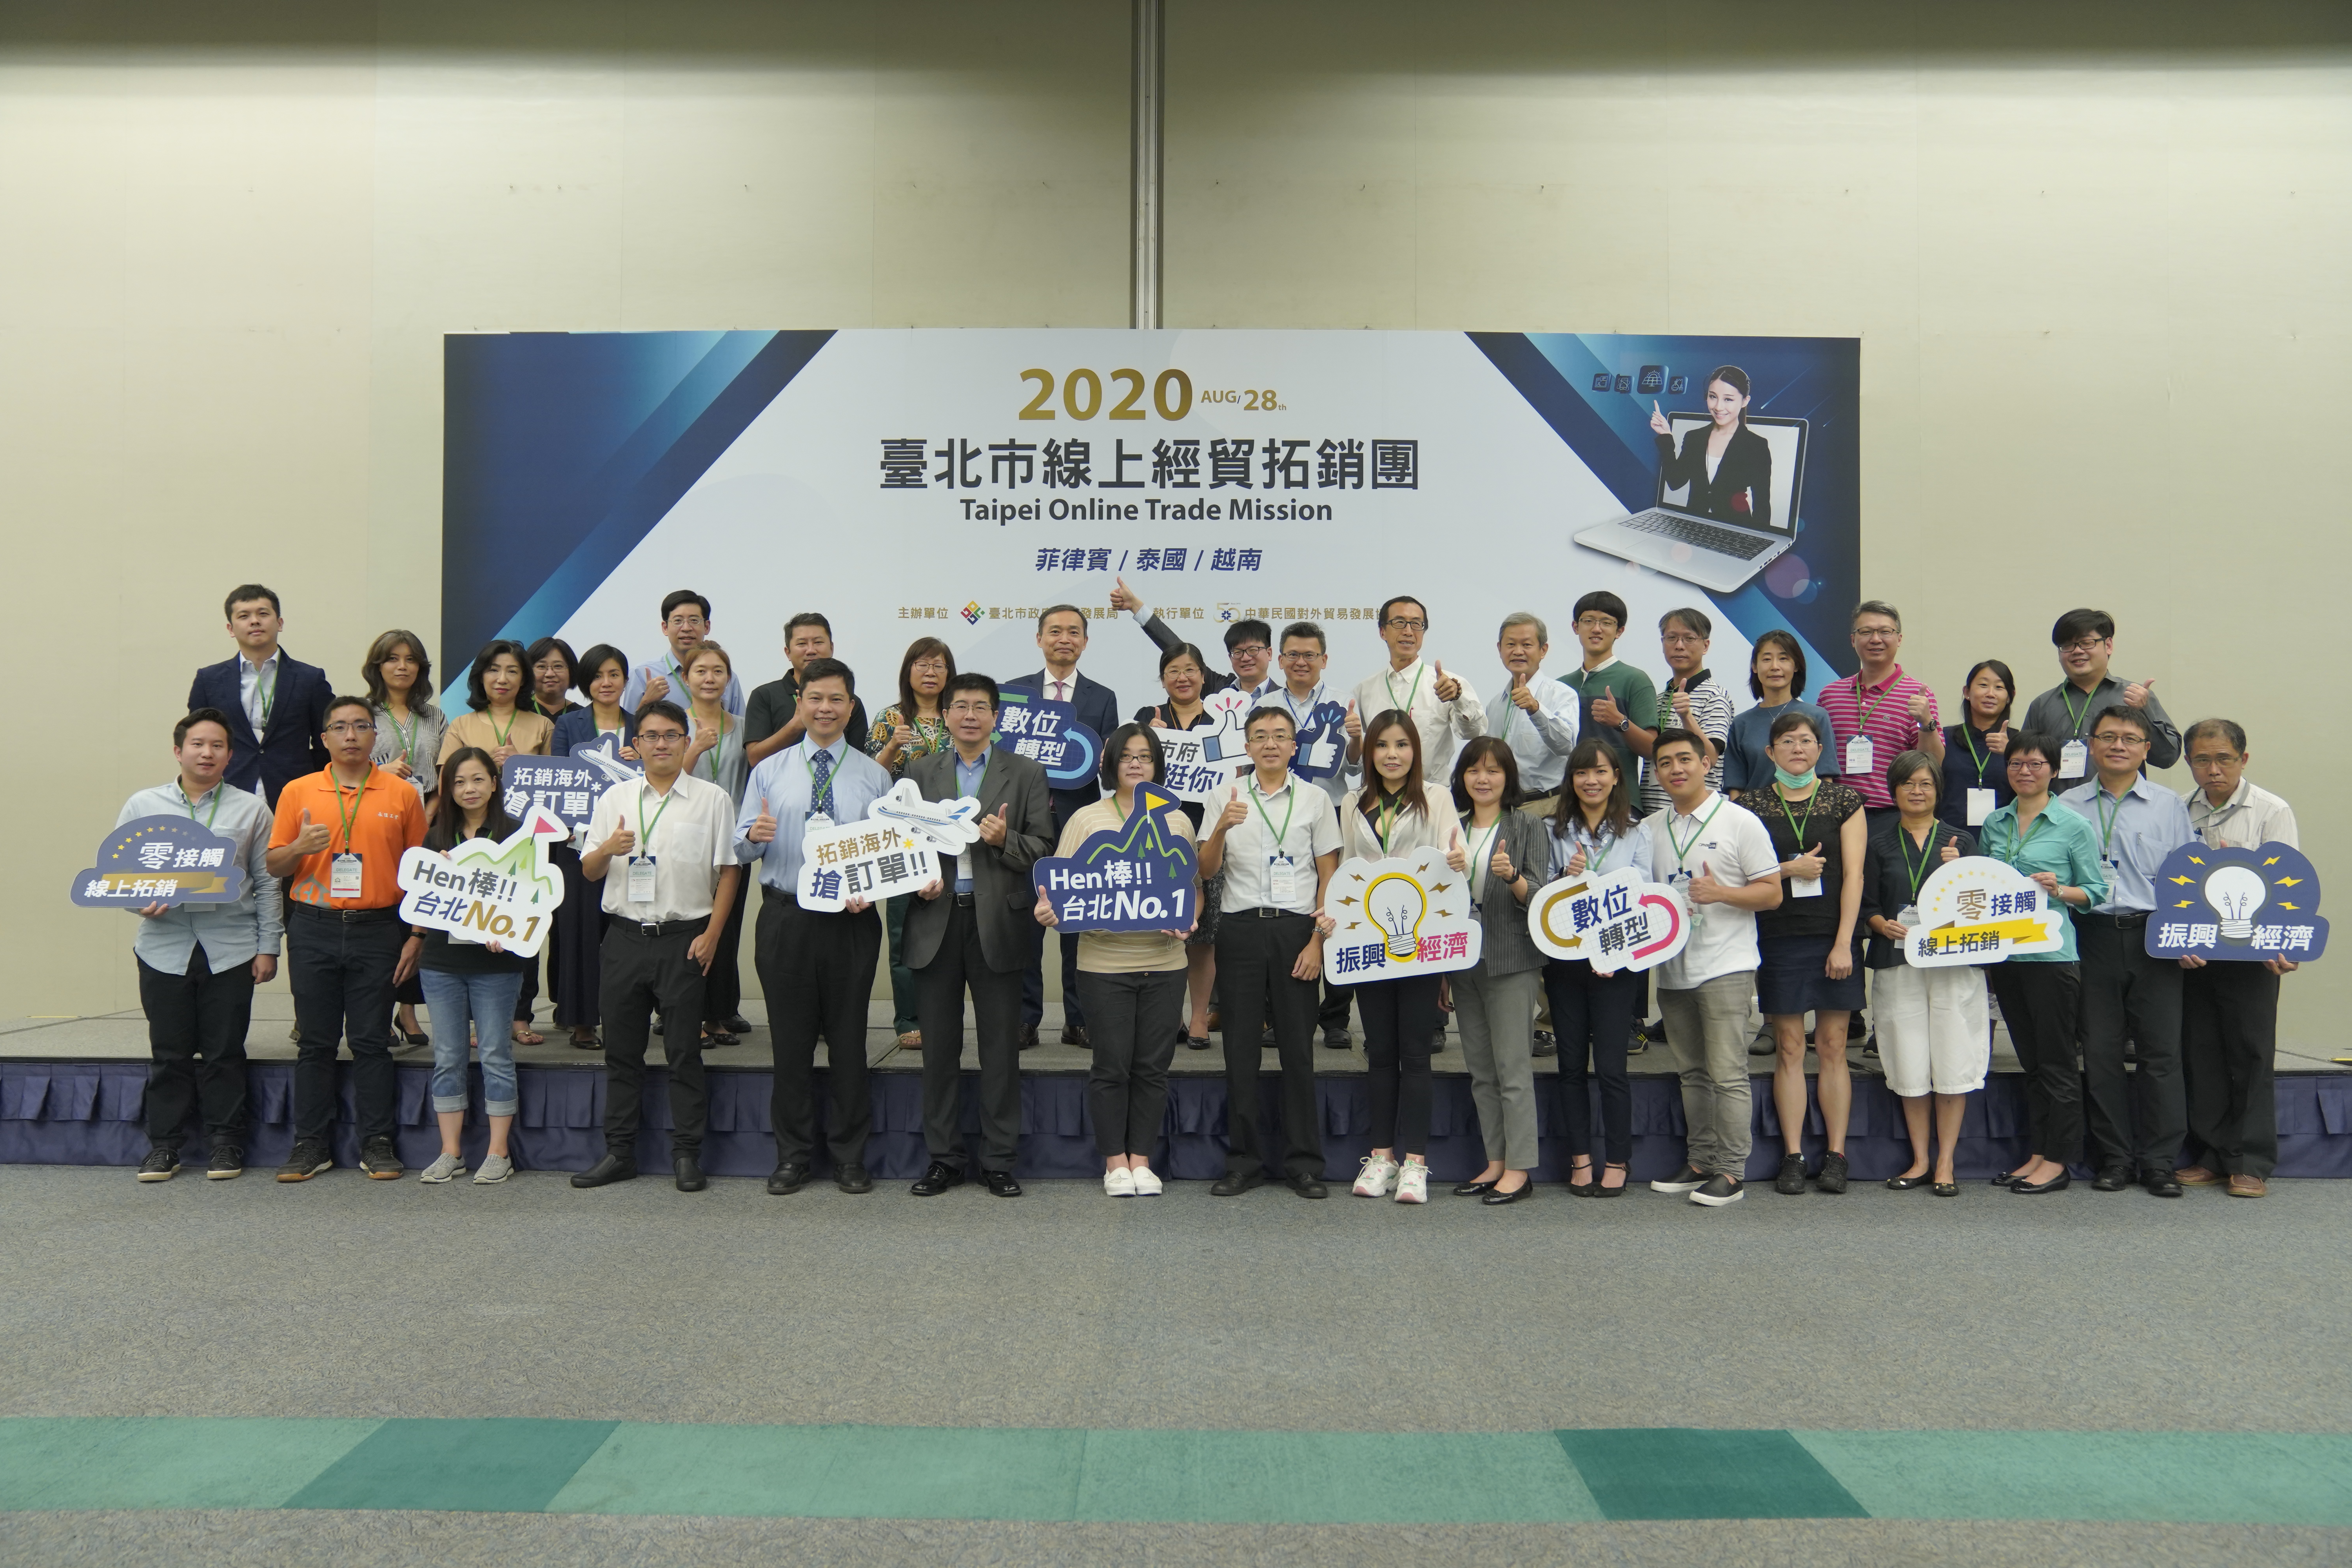 2020 Taipei Online Trade Mission